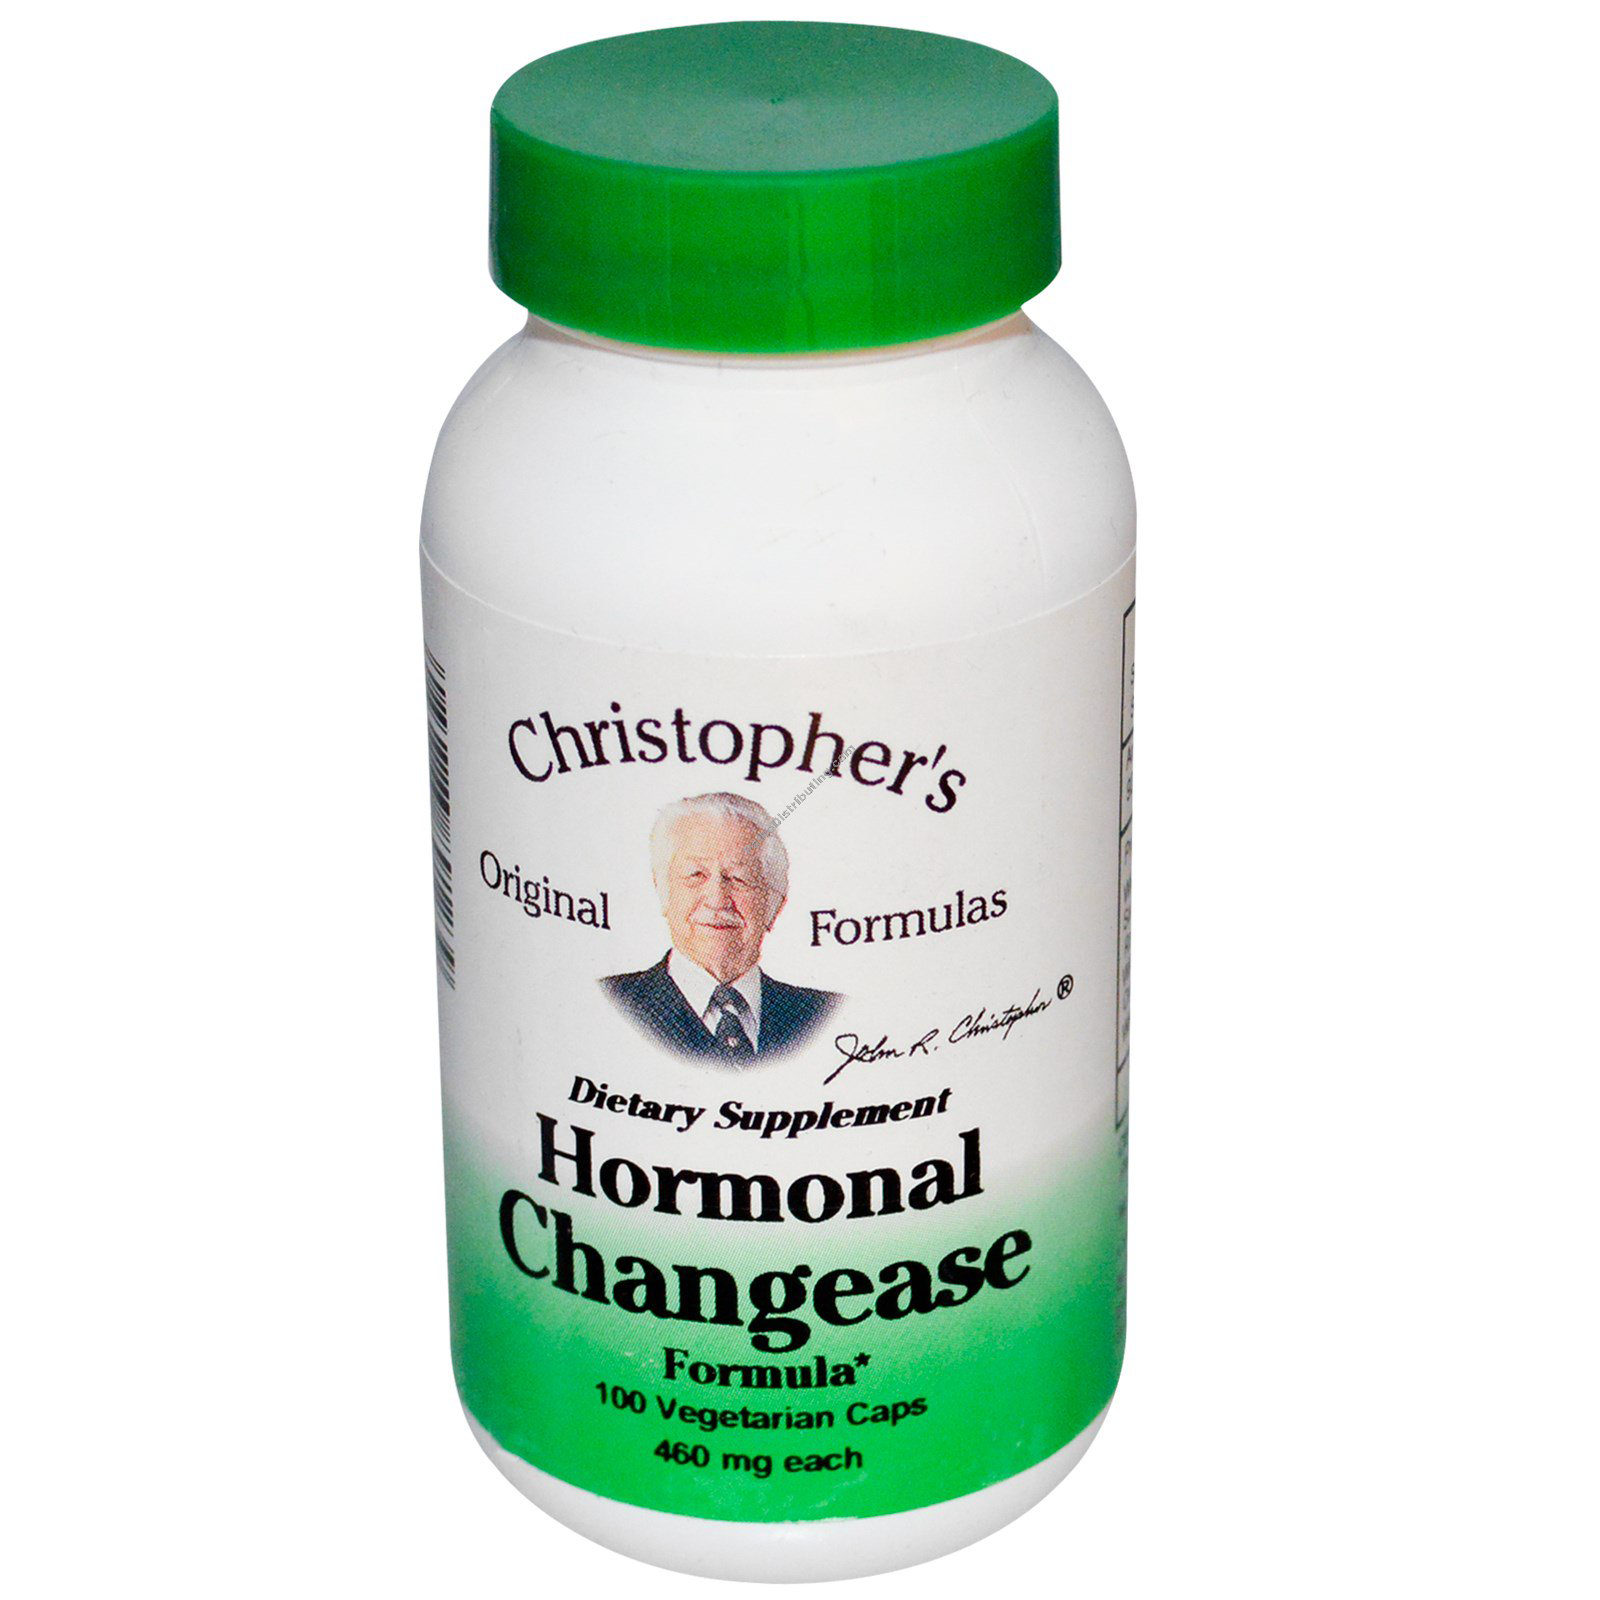 Product Image: Hormonal Changease Formula